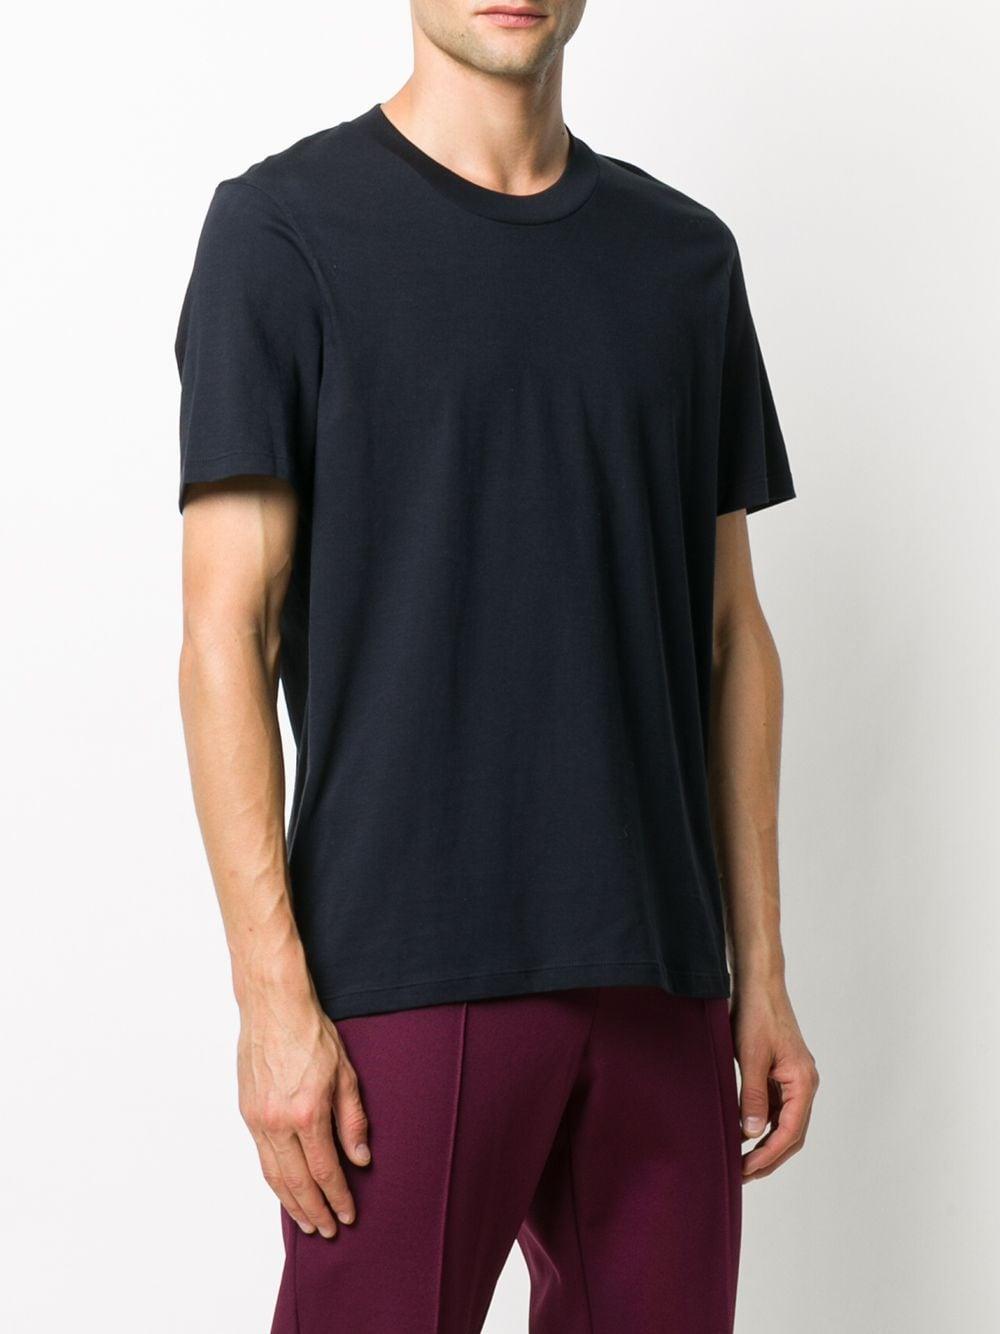 Jil Sander Cotton Round-neck Short-sleeve T-shirt in Blue for Men - Lyst